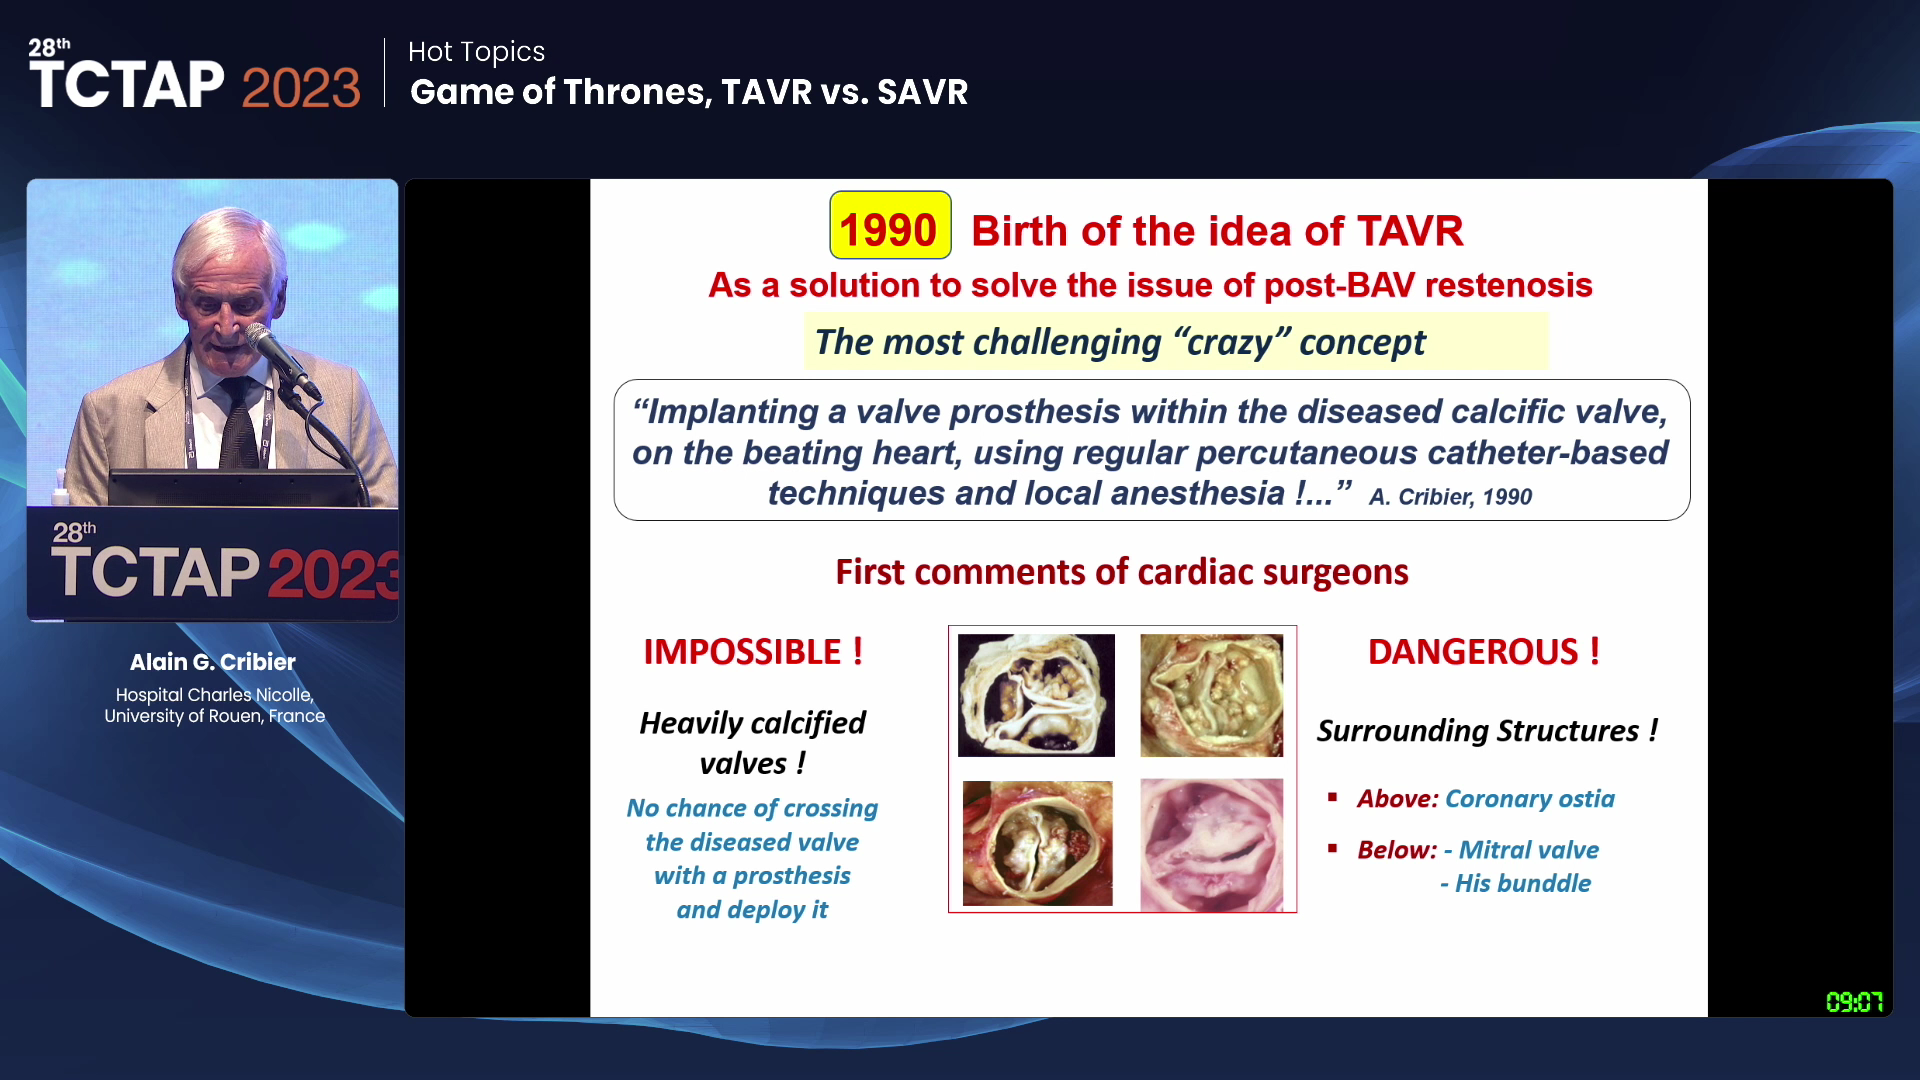 [Hot Topics] Game of Thrones, TAVR vs. SAVR